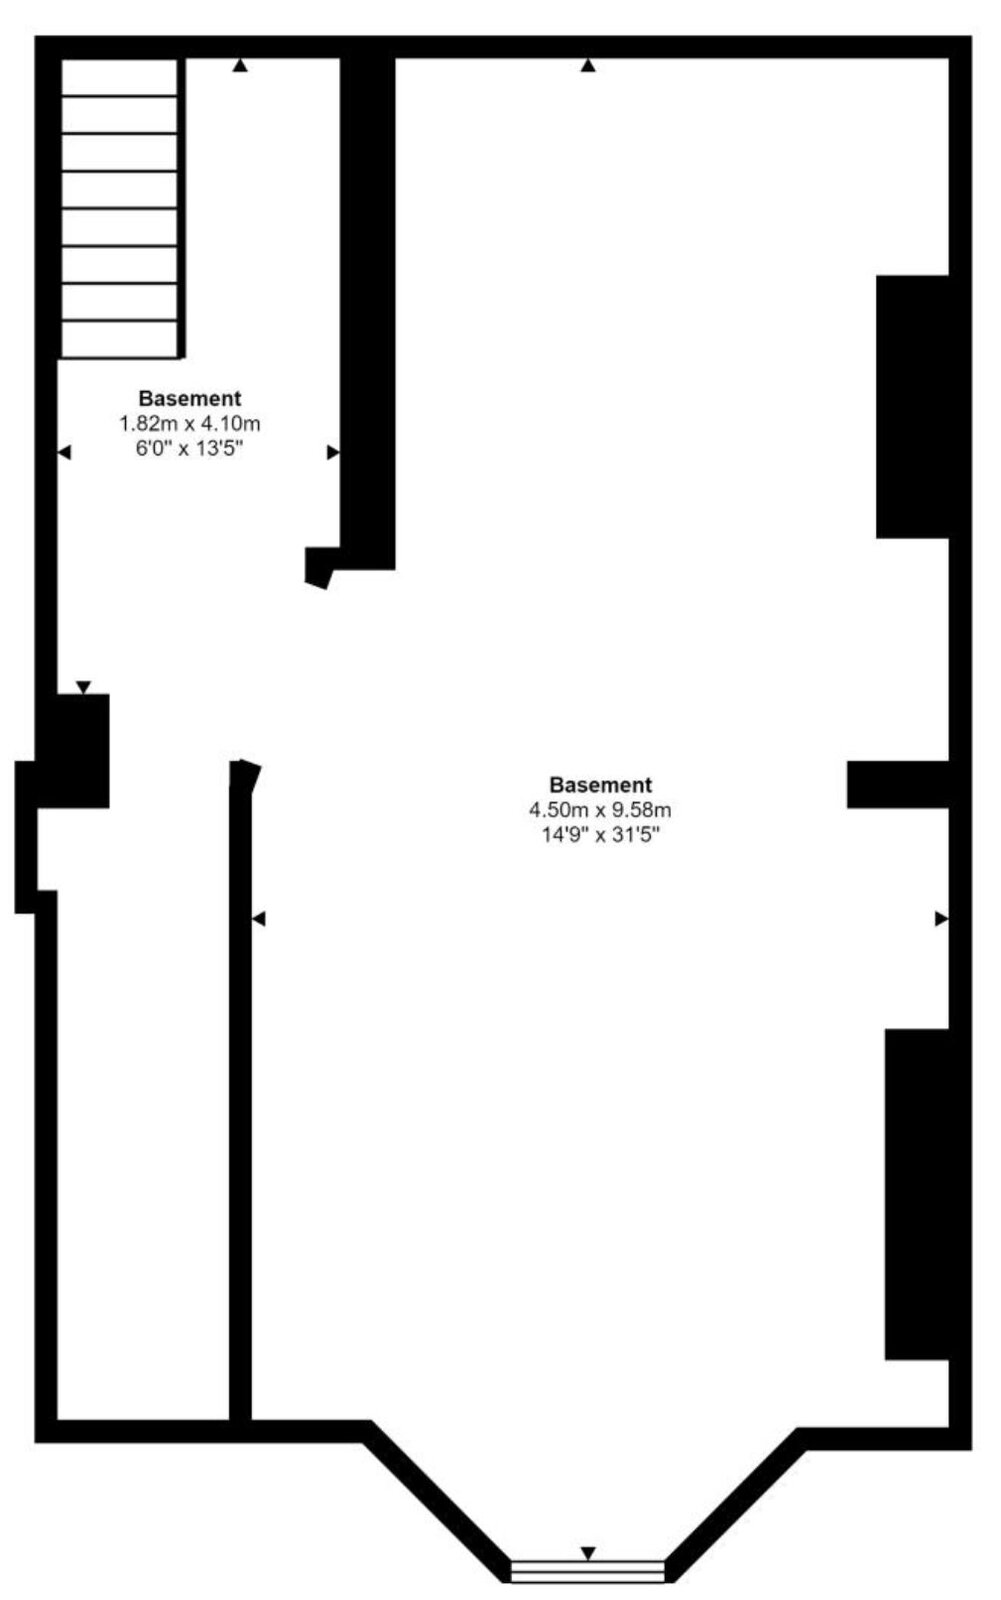 basement measurements.jpg